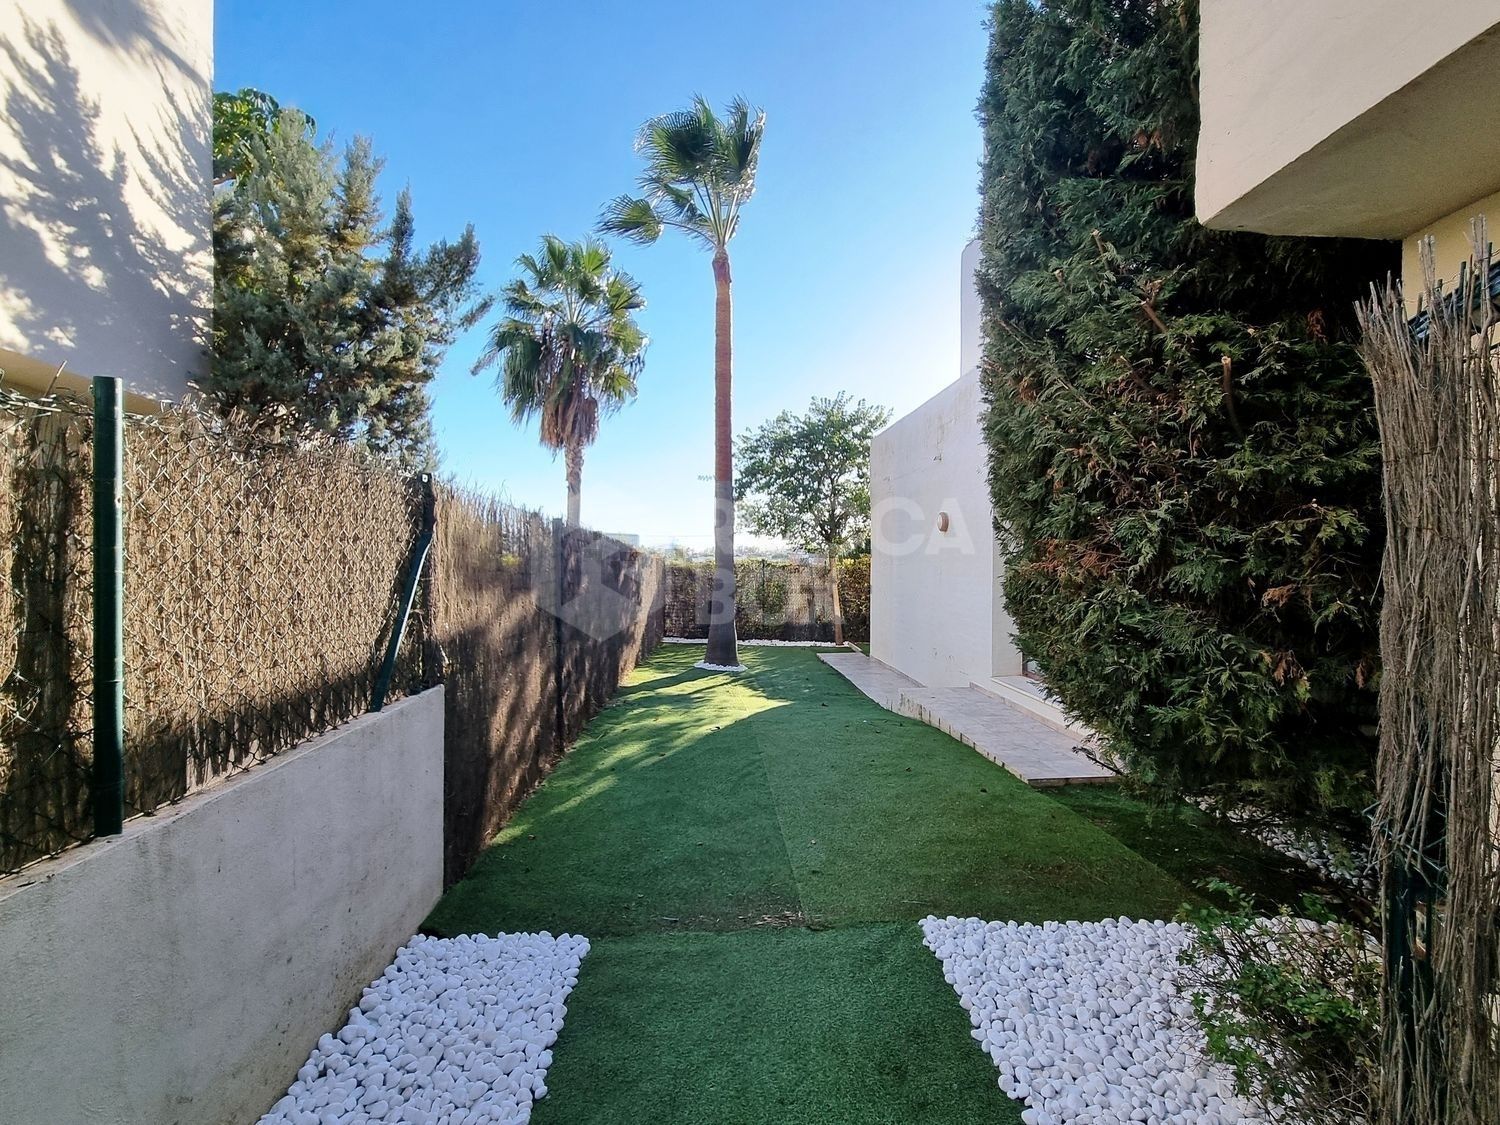 Luxury Semi Detached House in Estepona, Malaga